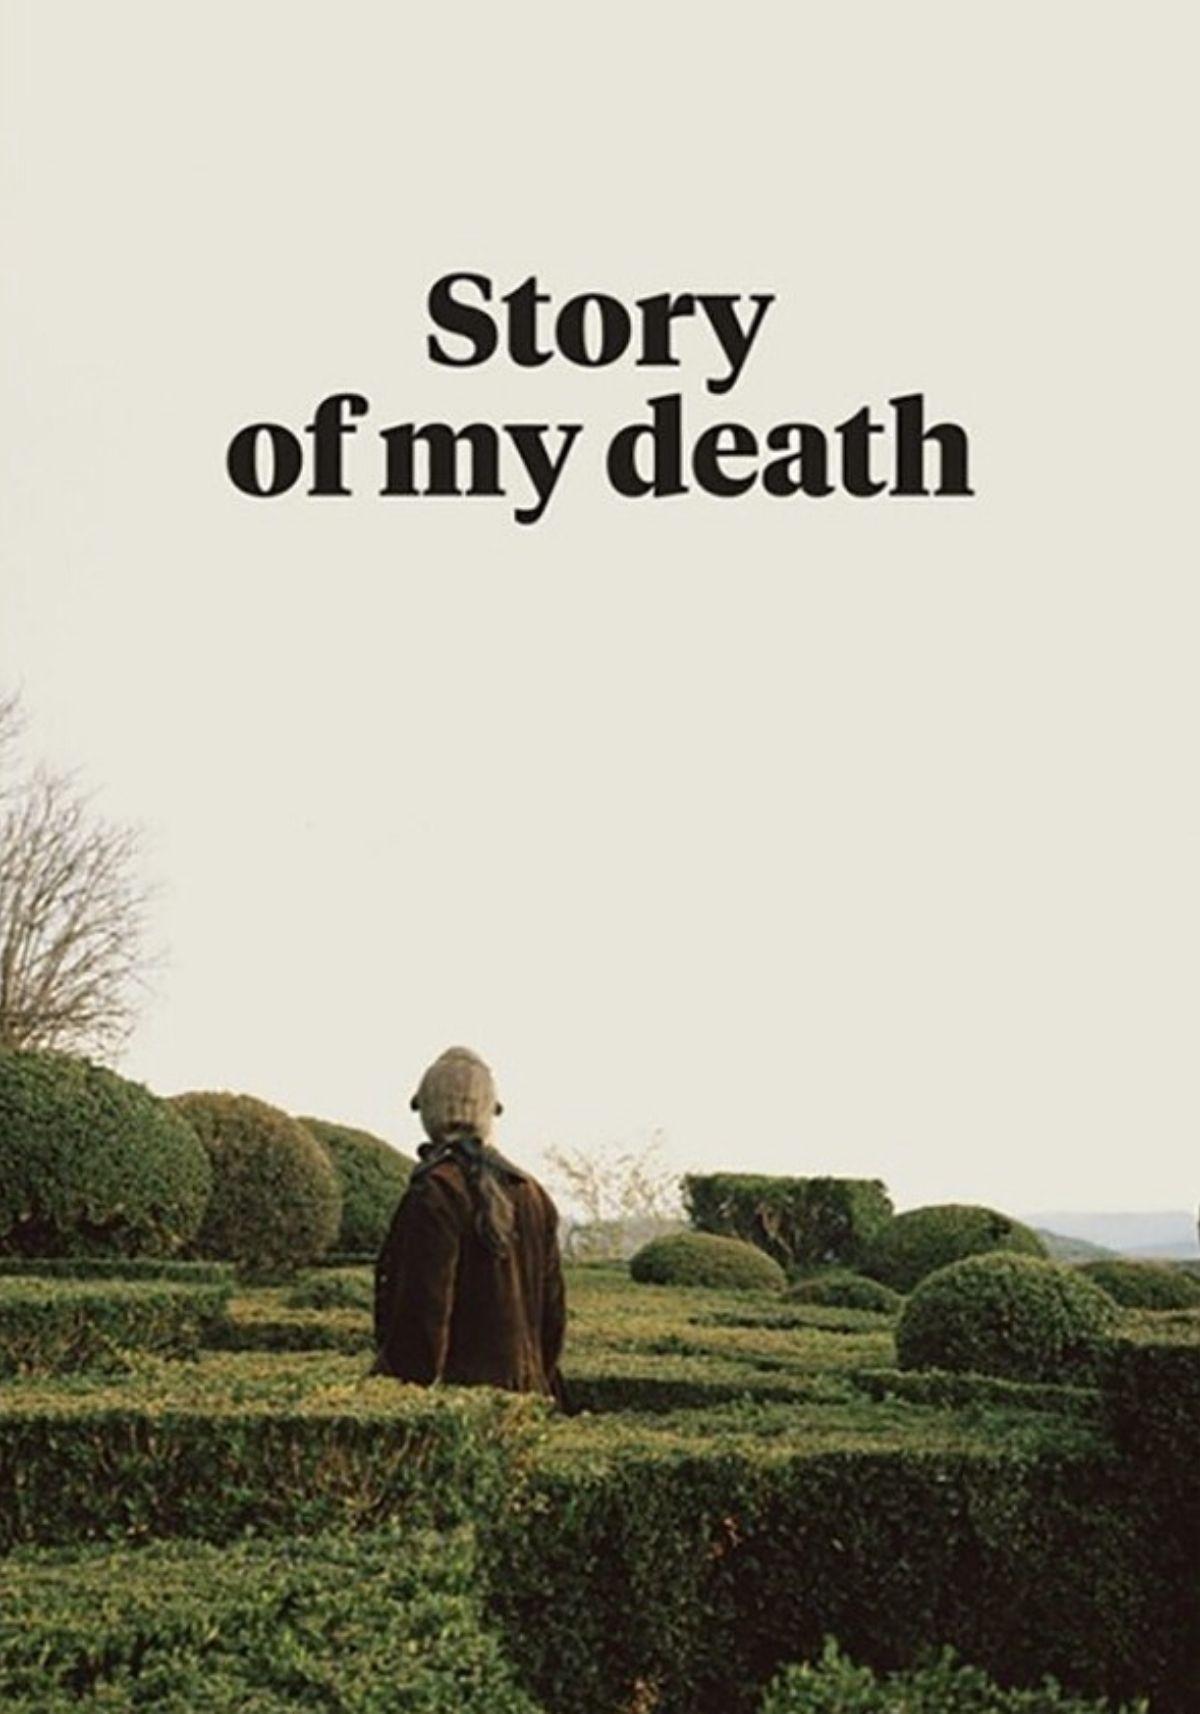 The Story of My Death [Sub-ITA] (2013)